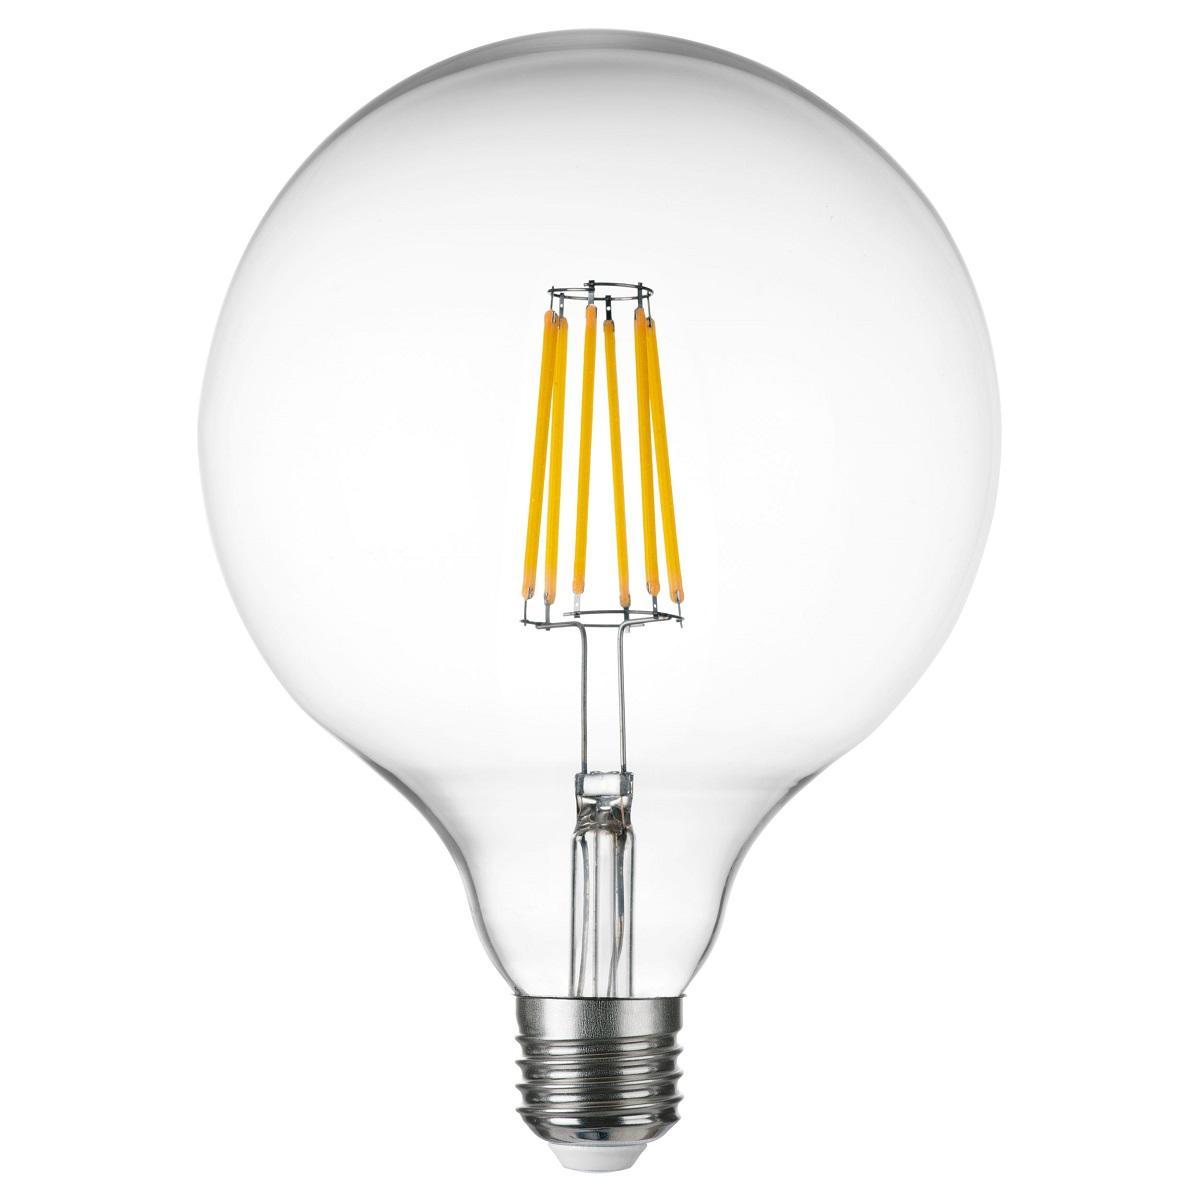 Лампа светодиодная филаментная Lightstar LED Filament E27 10W 4000K груша прозрачная 933204